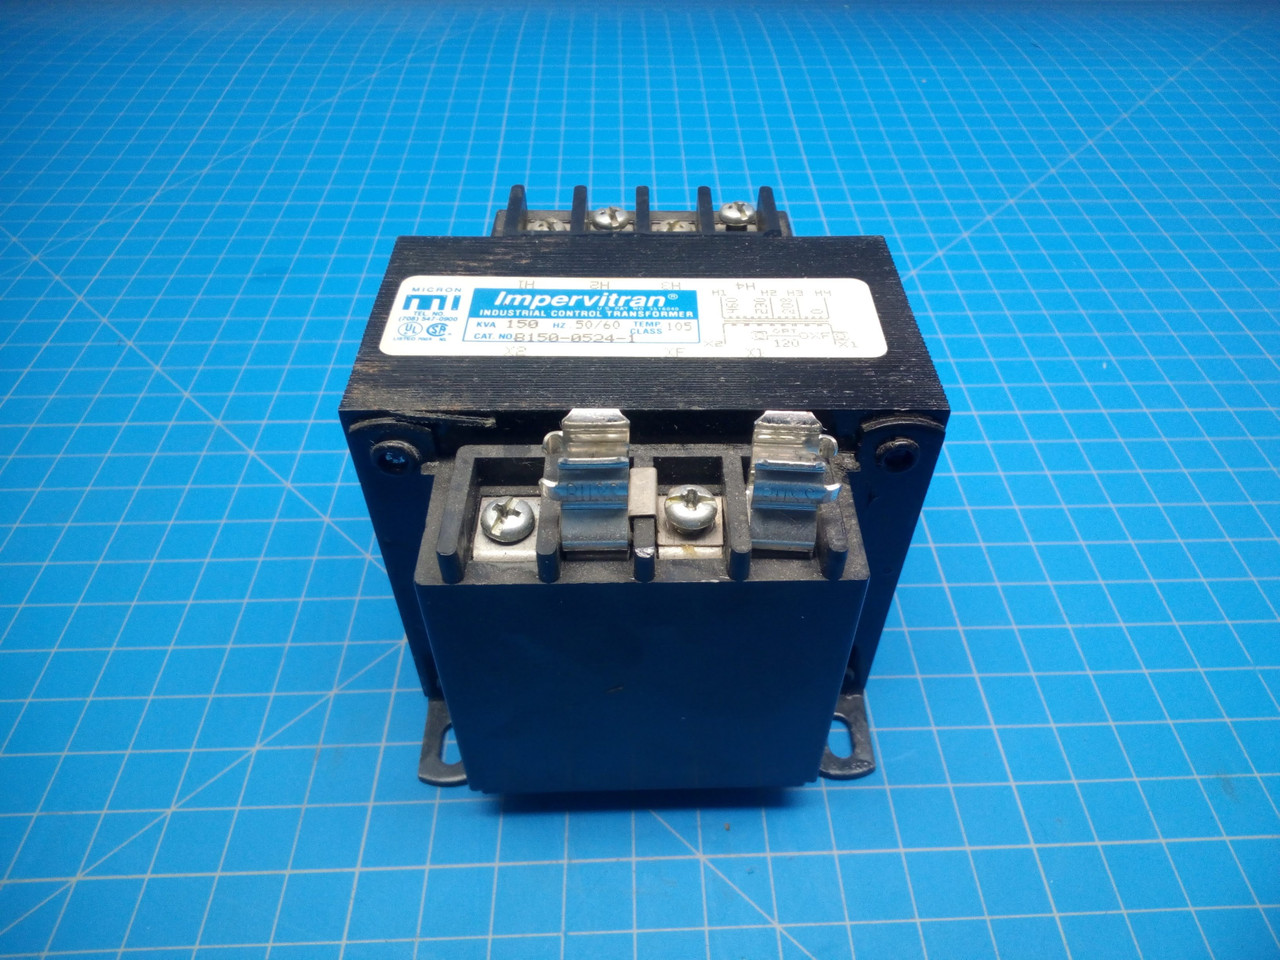 Impervitran Industrial Control Transformer B150-0524-1 - P02-000215